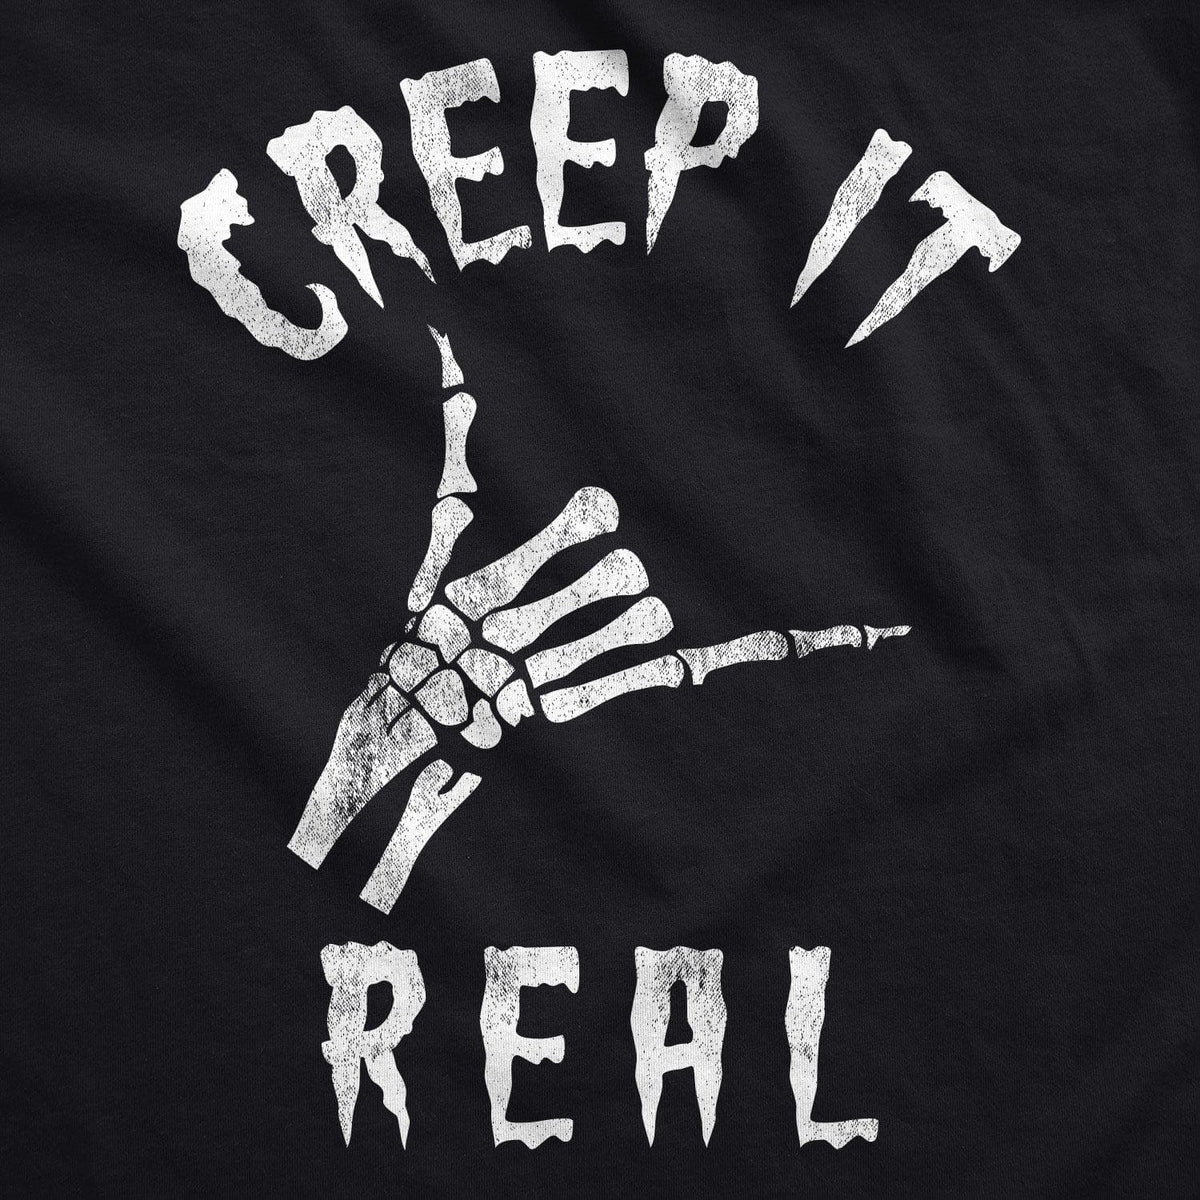 Creep It Real Men&#39;s Tshirt - Crazy Dog T-Shirts